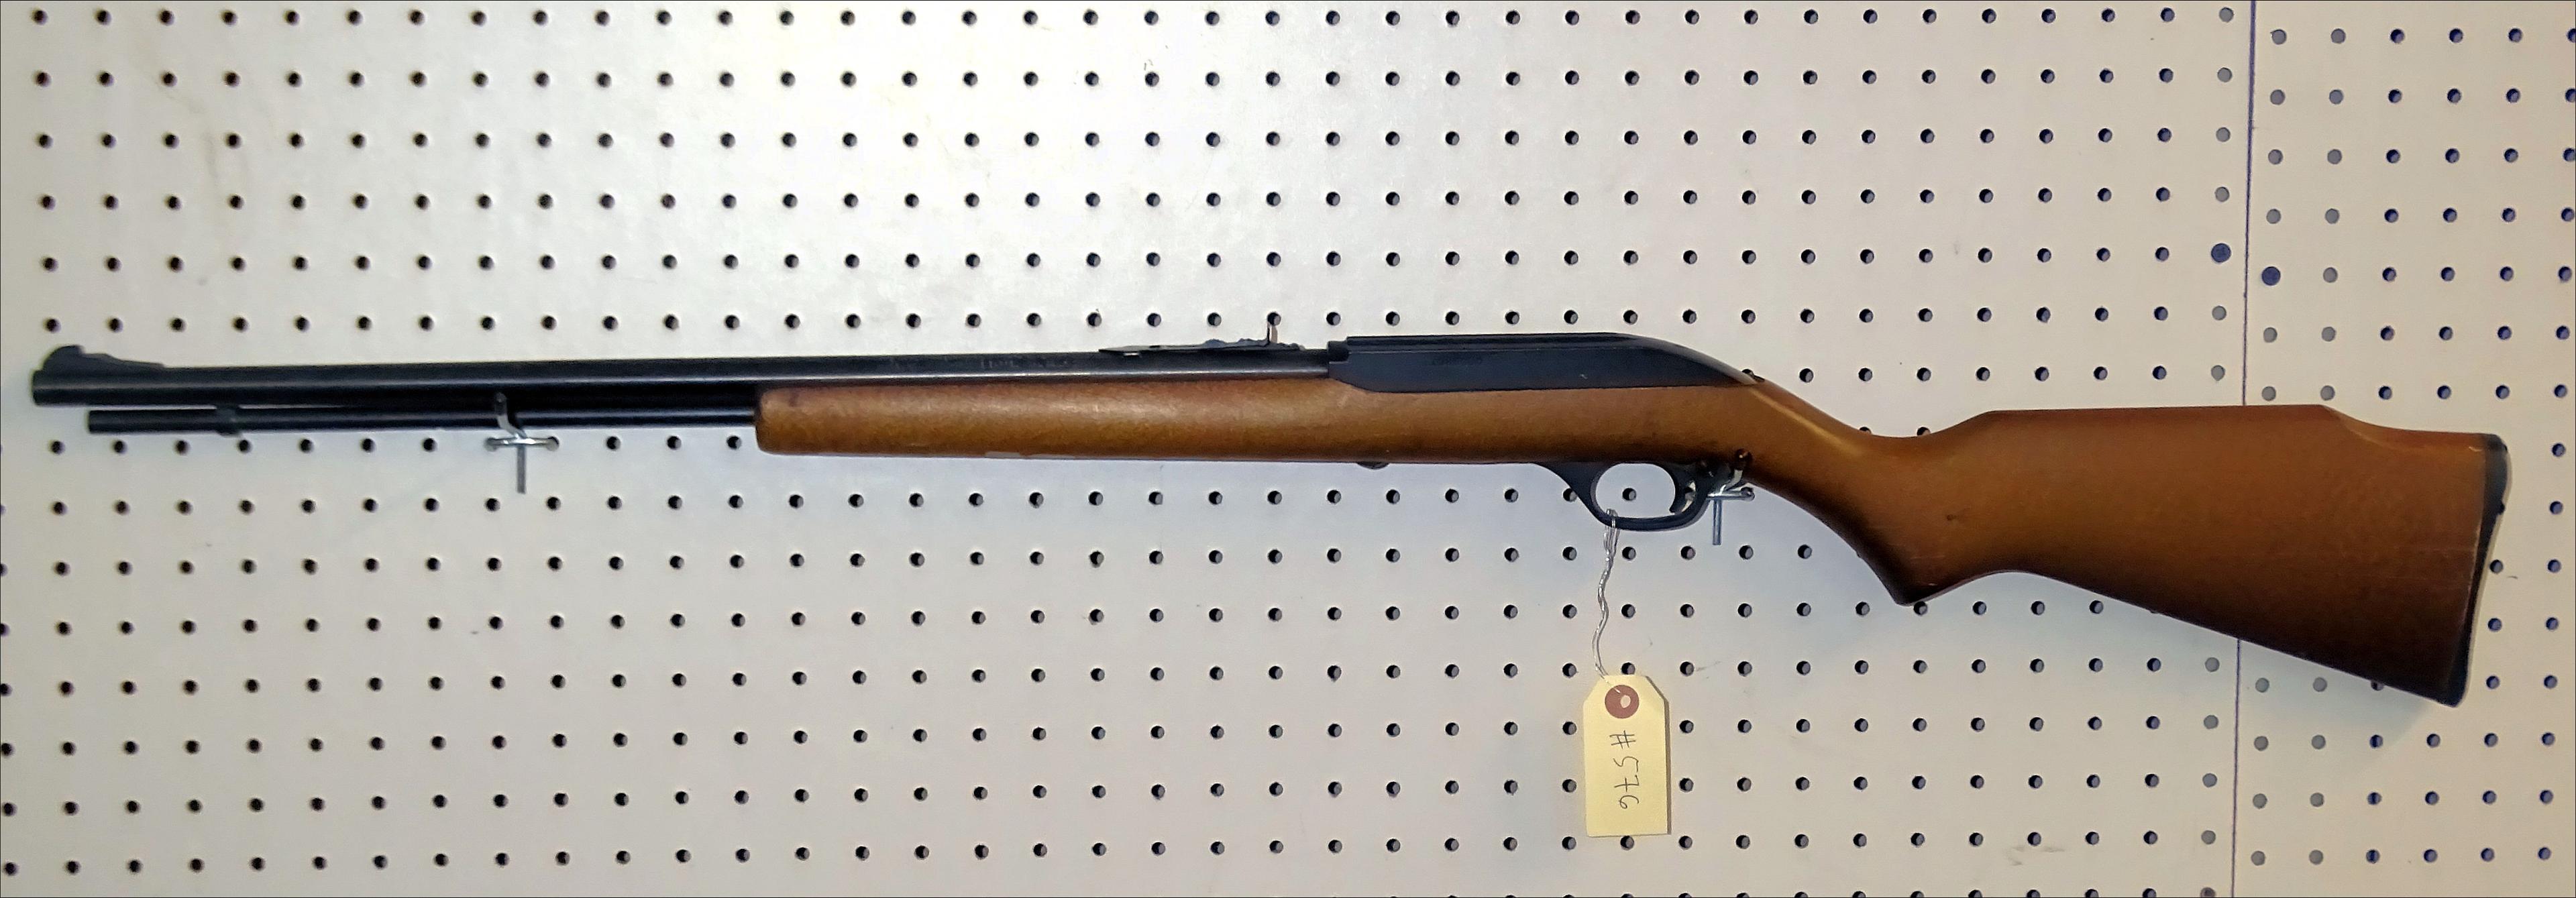 Marlin .22 rifle